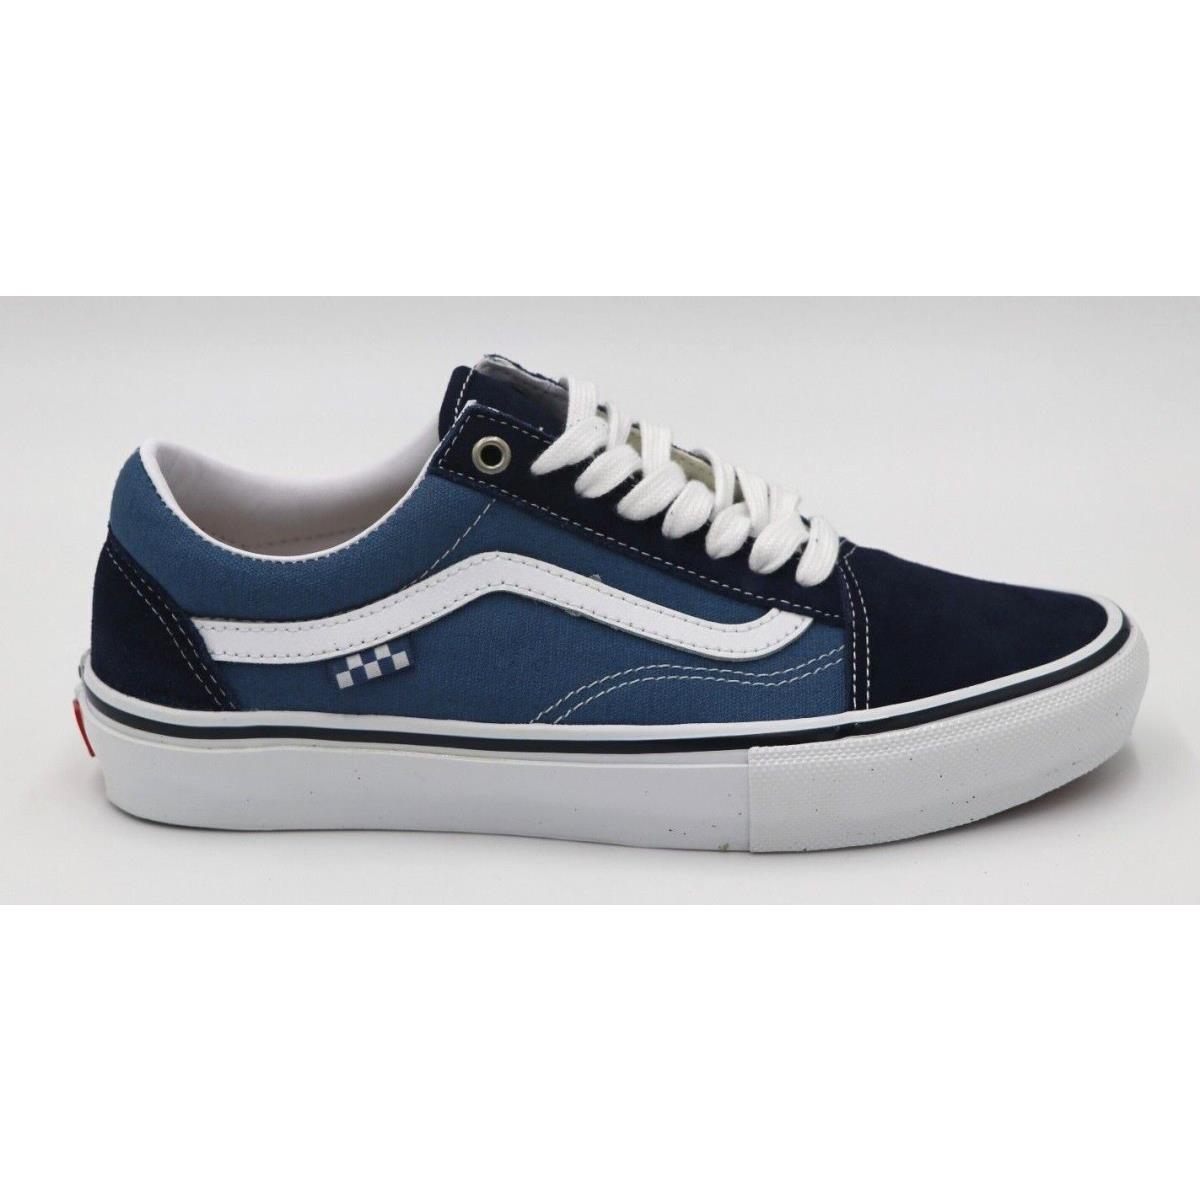 Vans Old Skool Navy/blue/white Pro Shoes